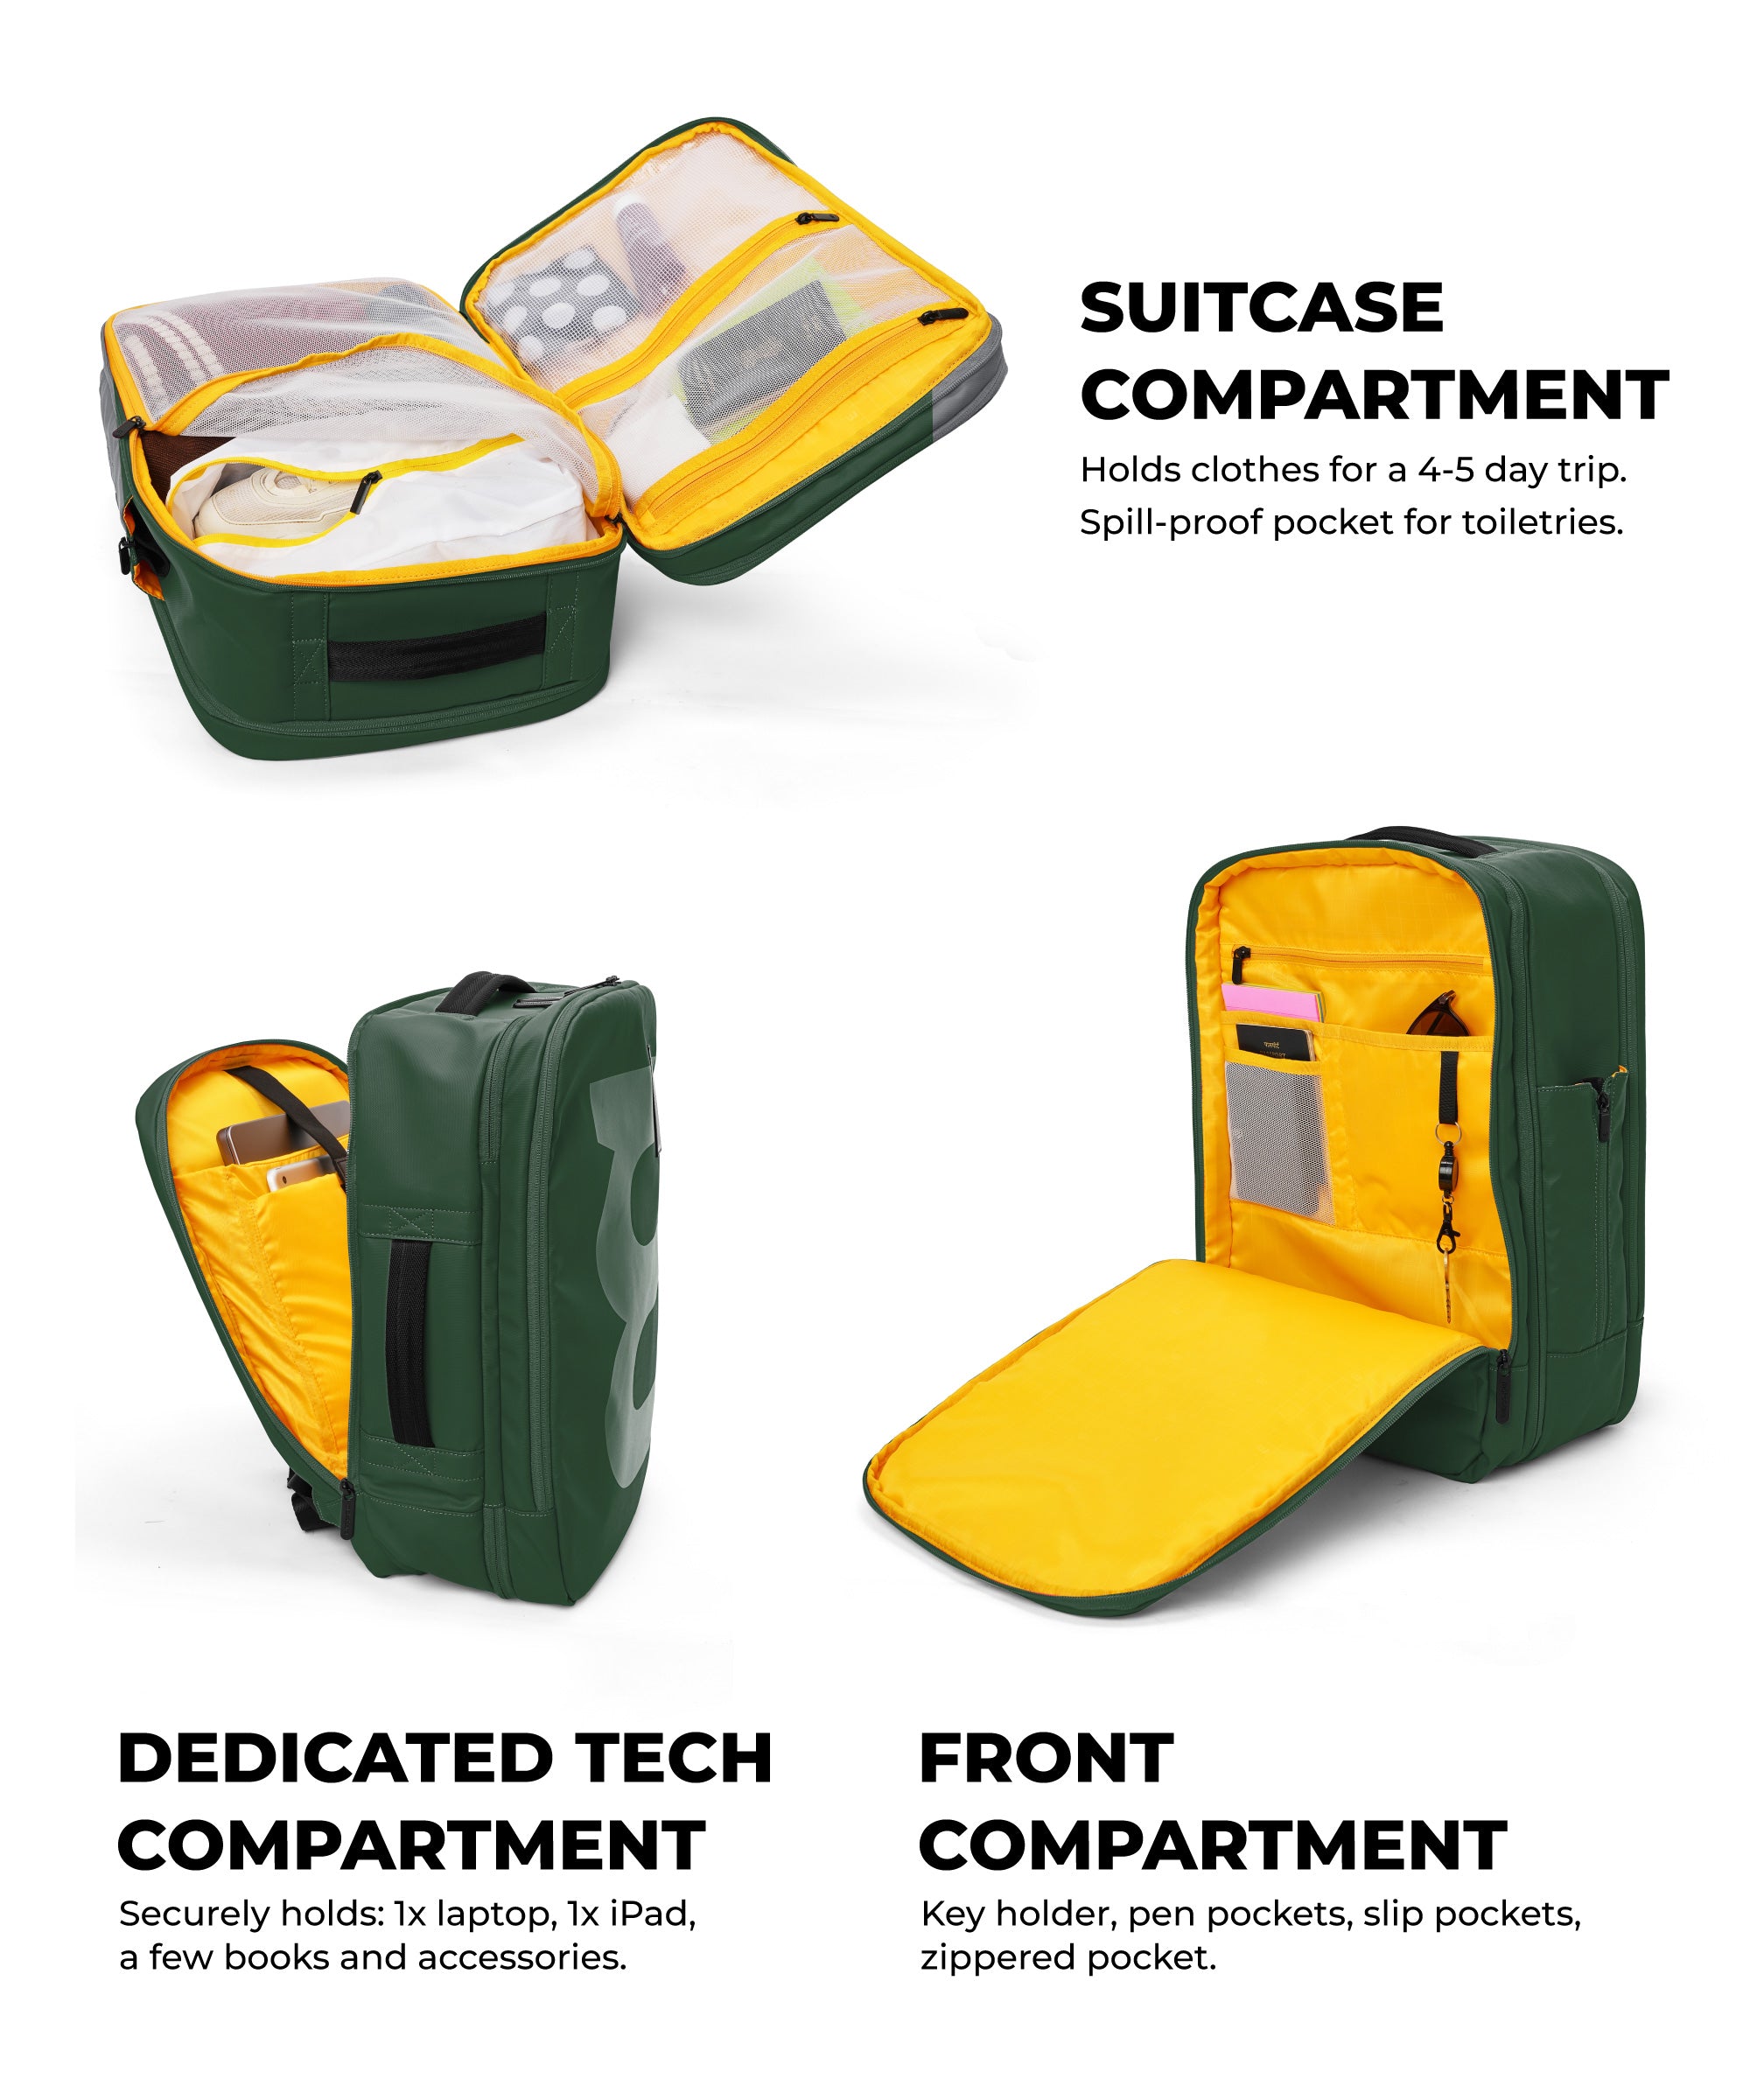 Color_Green Energy 2.0 | The Em Travel Backpack - 45L